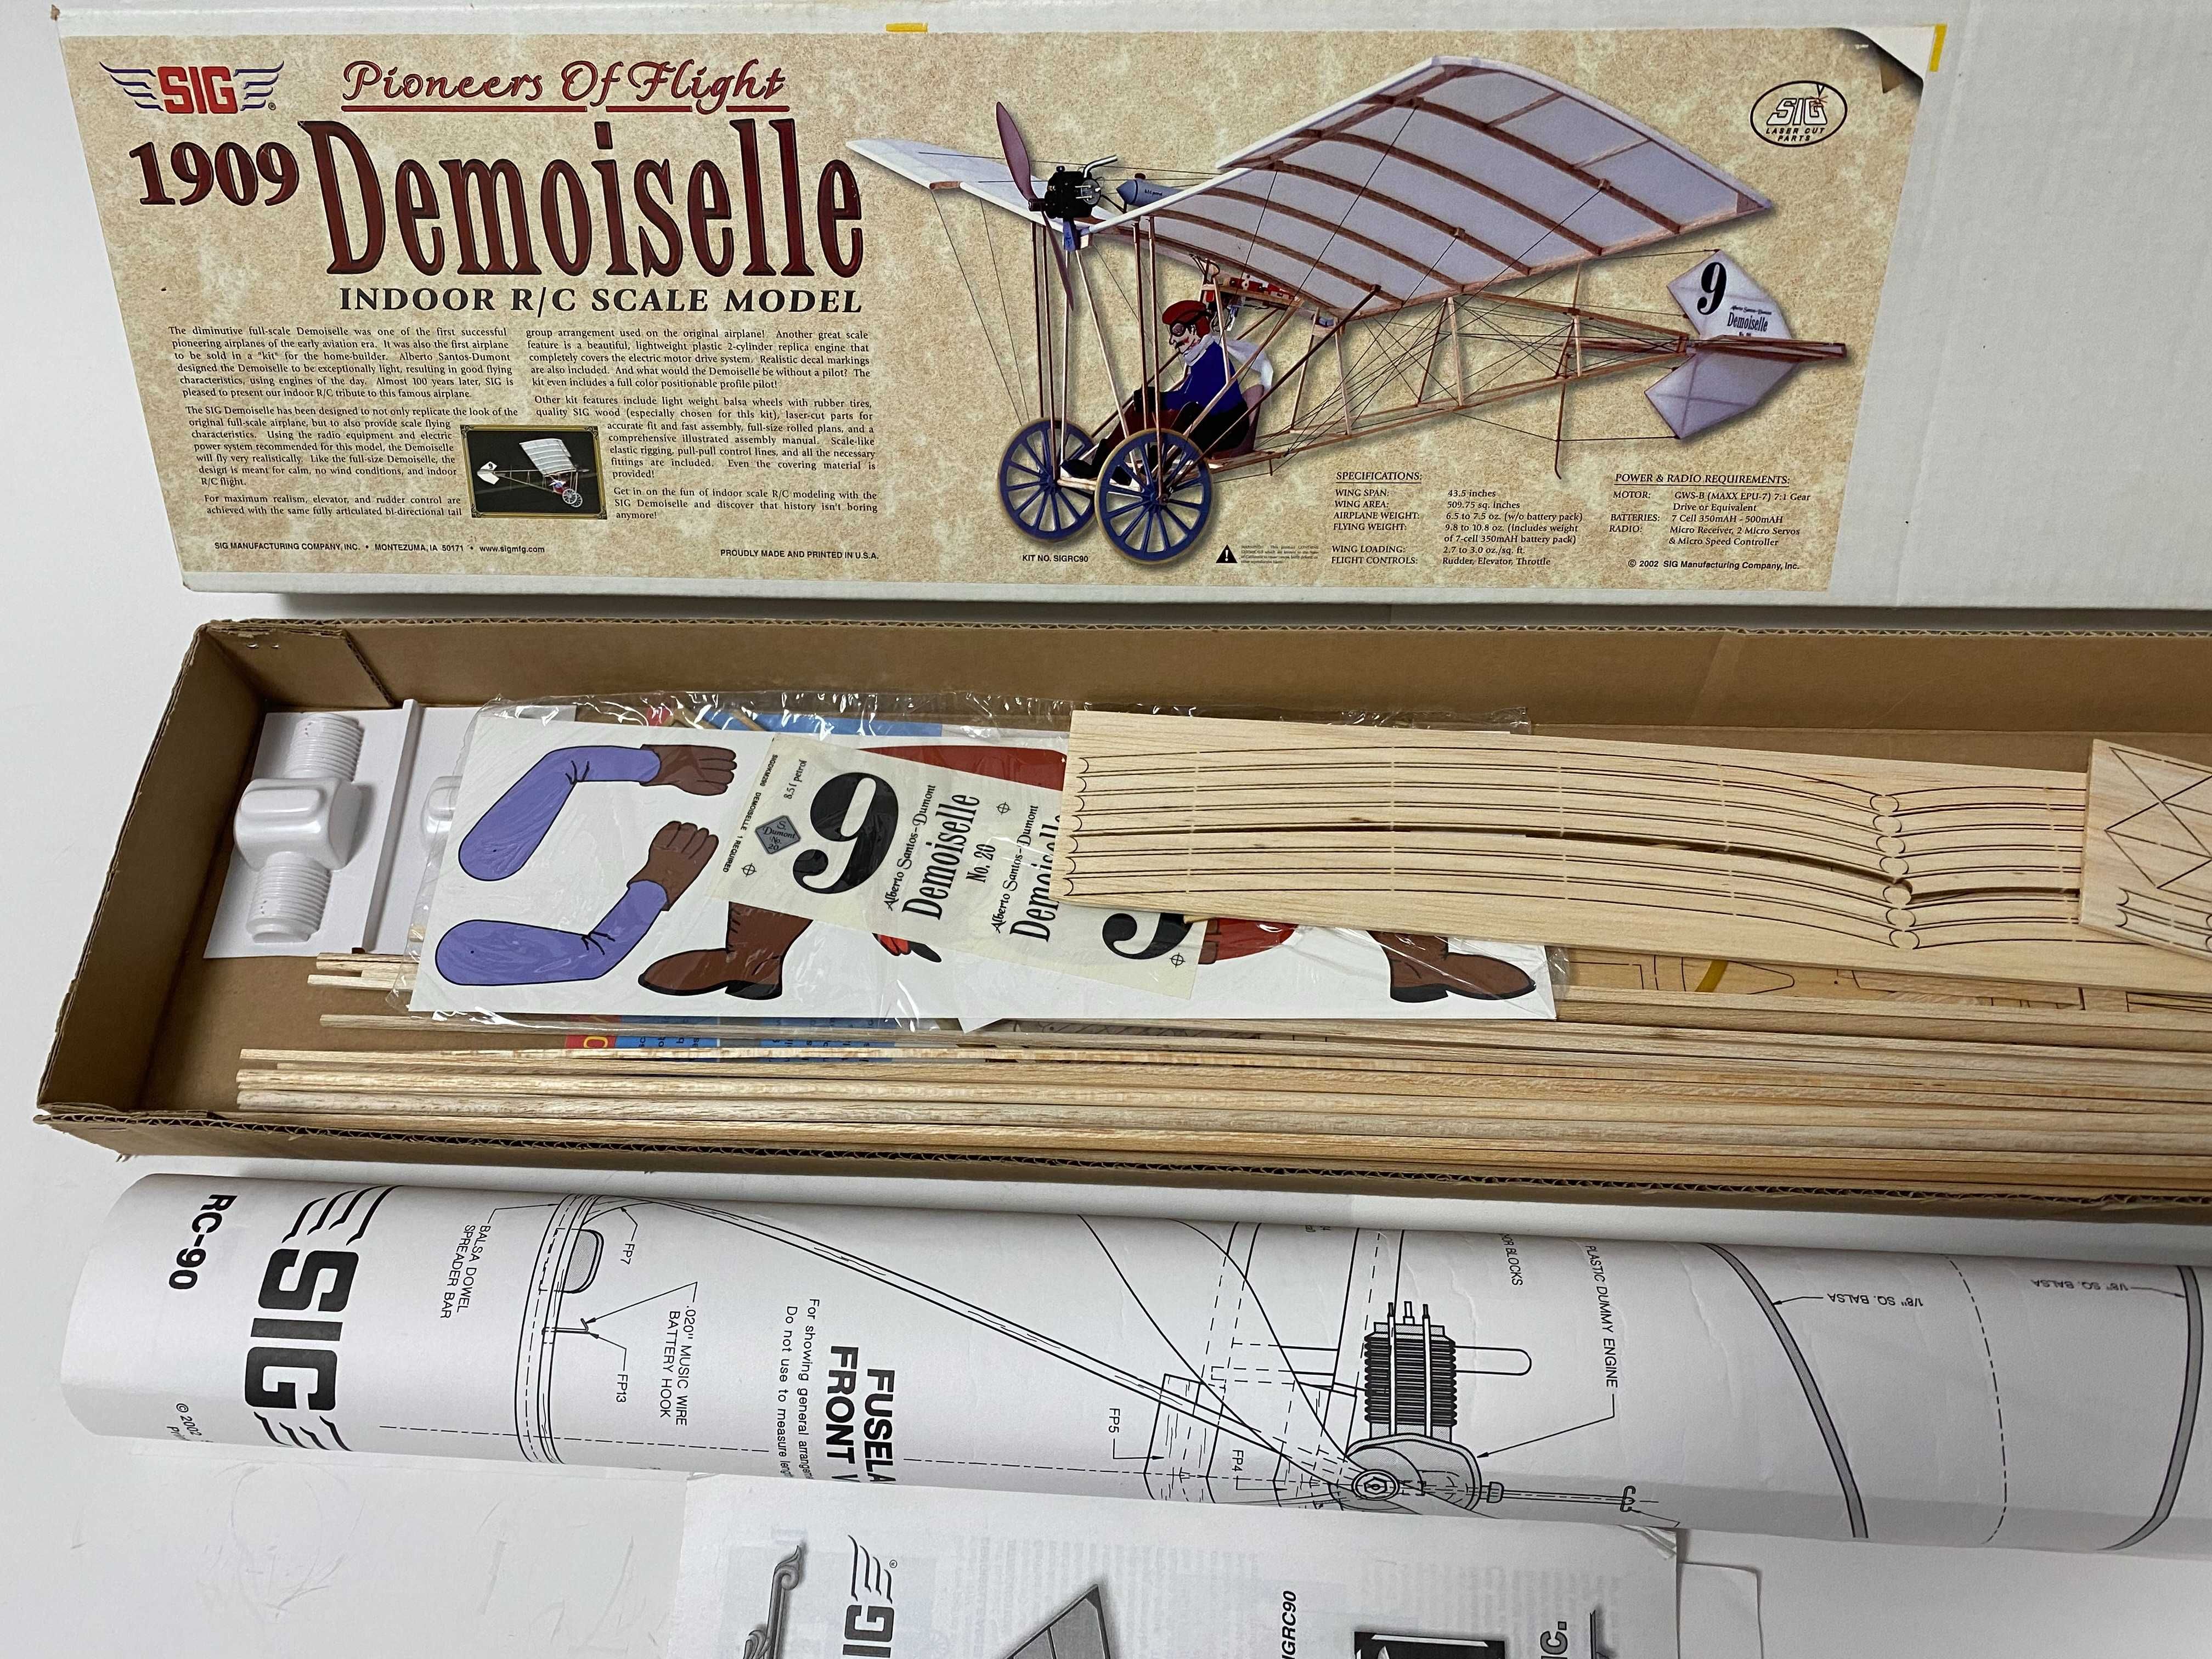 SIG 1909 Demoiselle model avion la scara